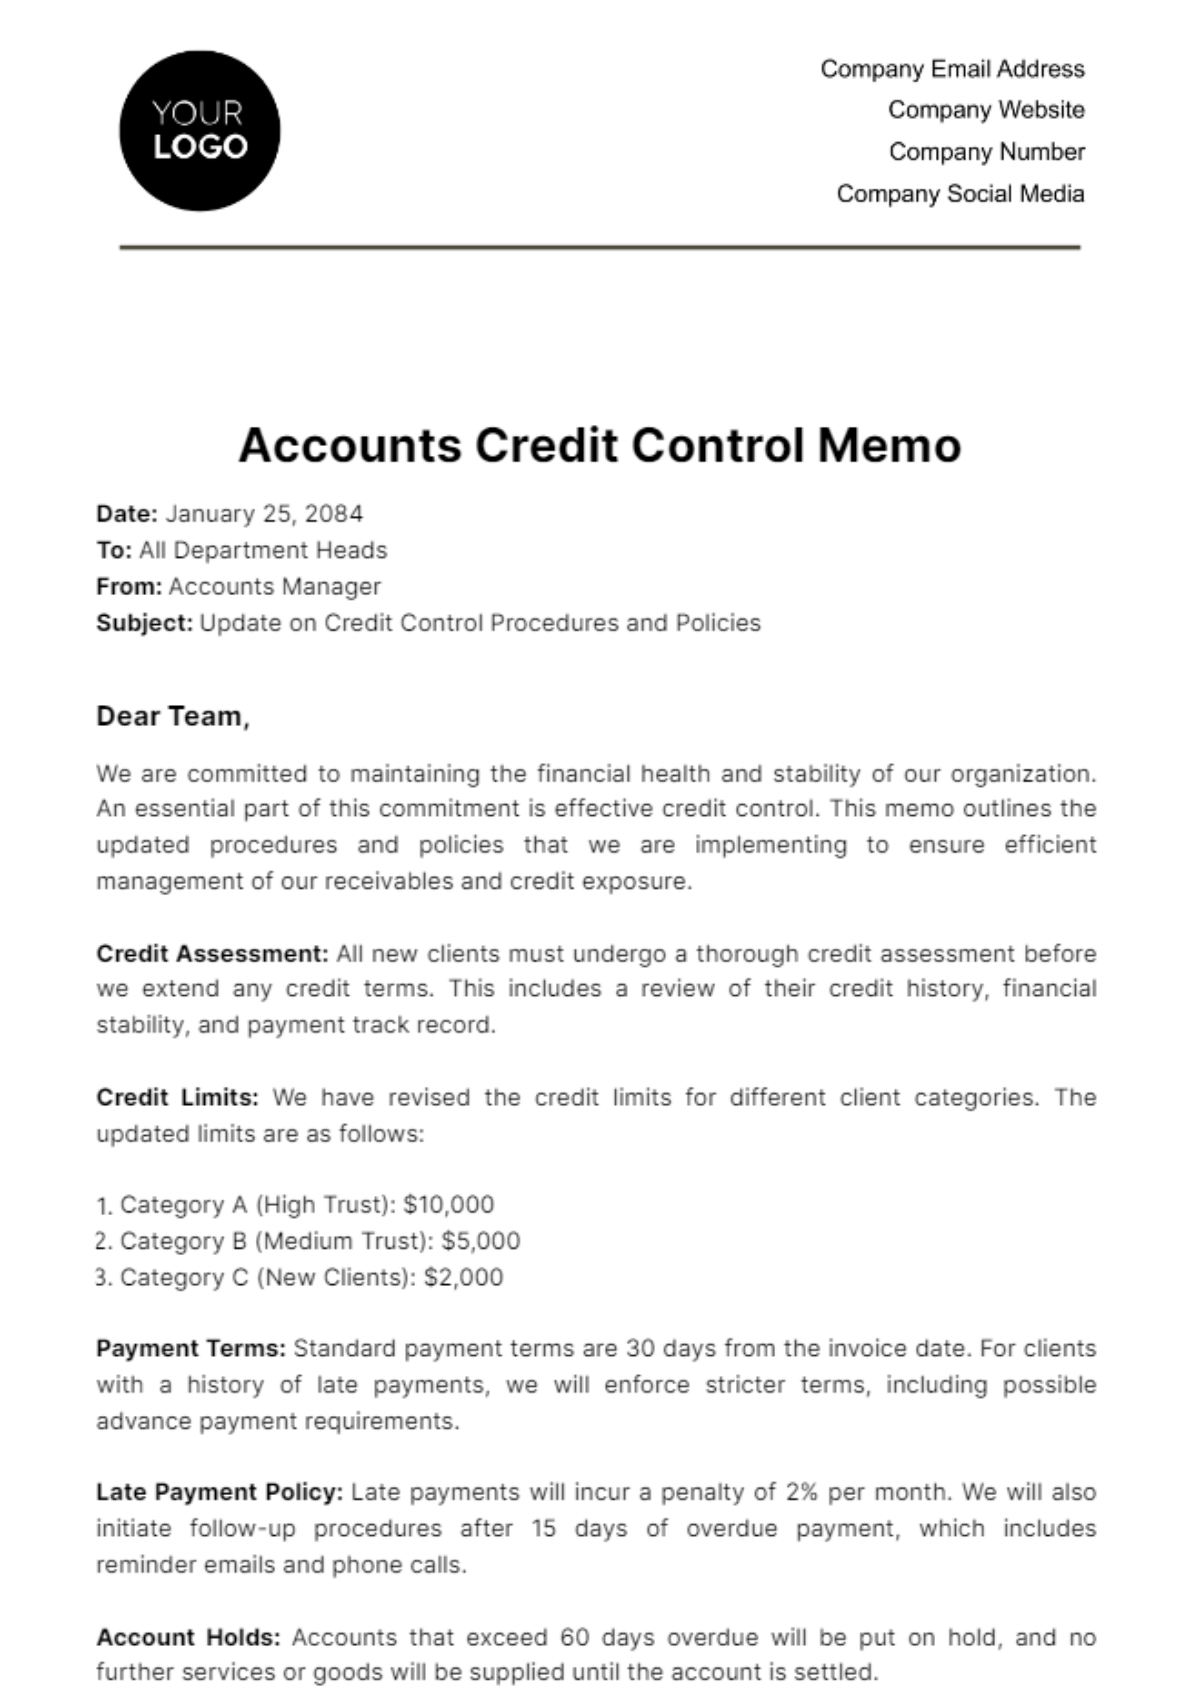 Accounts Credit Control Memo Template